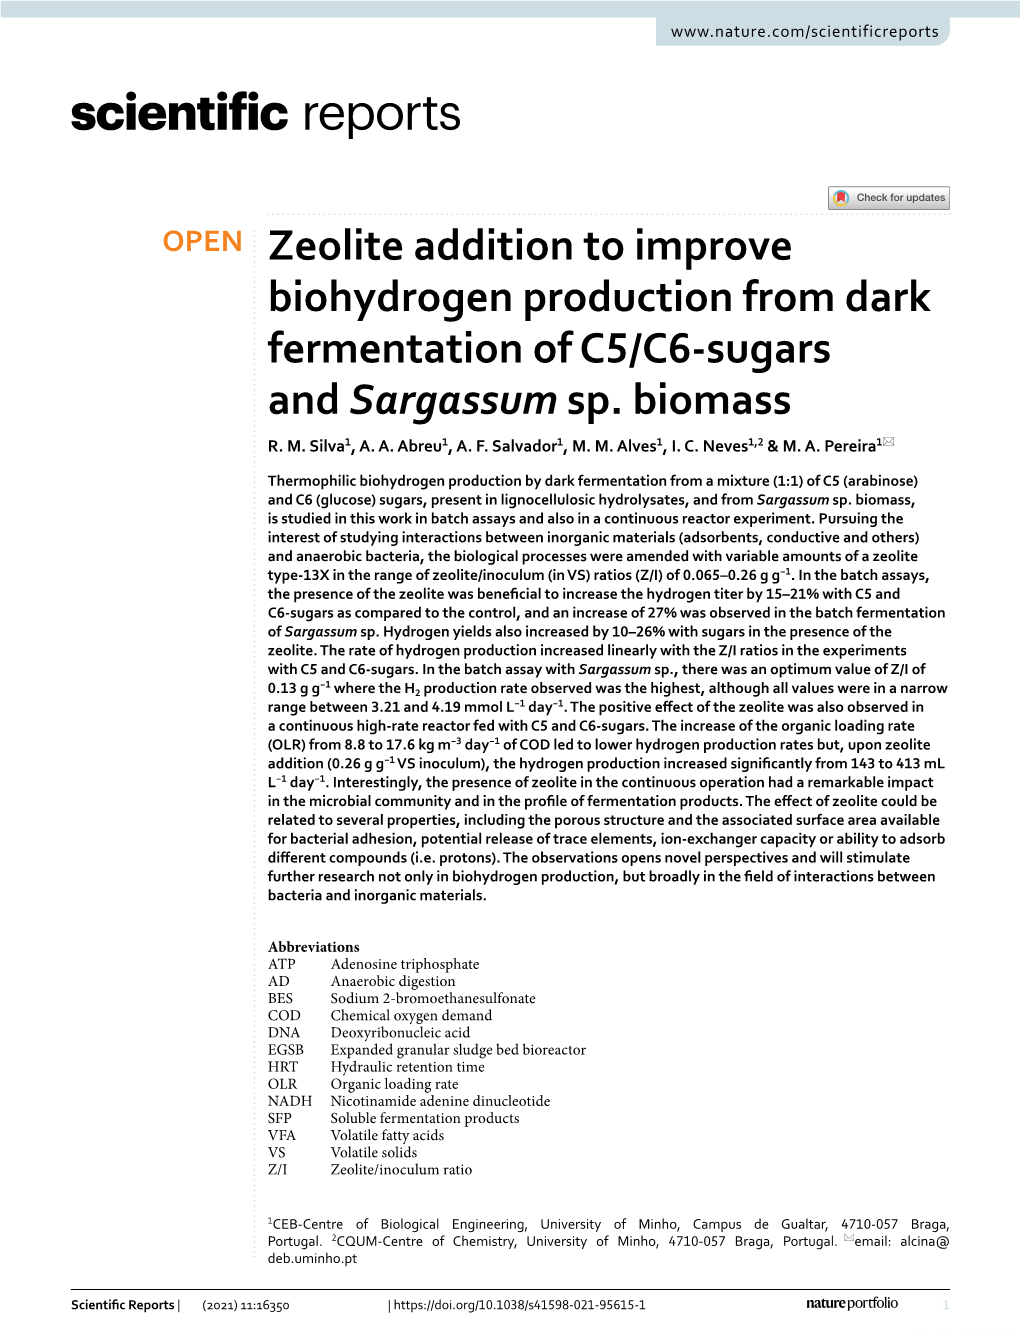 Zeolite Addition to Improve Biohydrogen Production from Dark Fermentation of C5/C6‑Sugars and Sargassum Sp